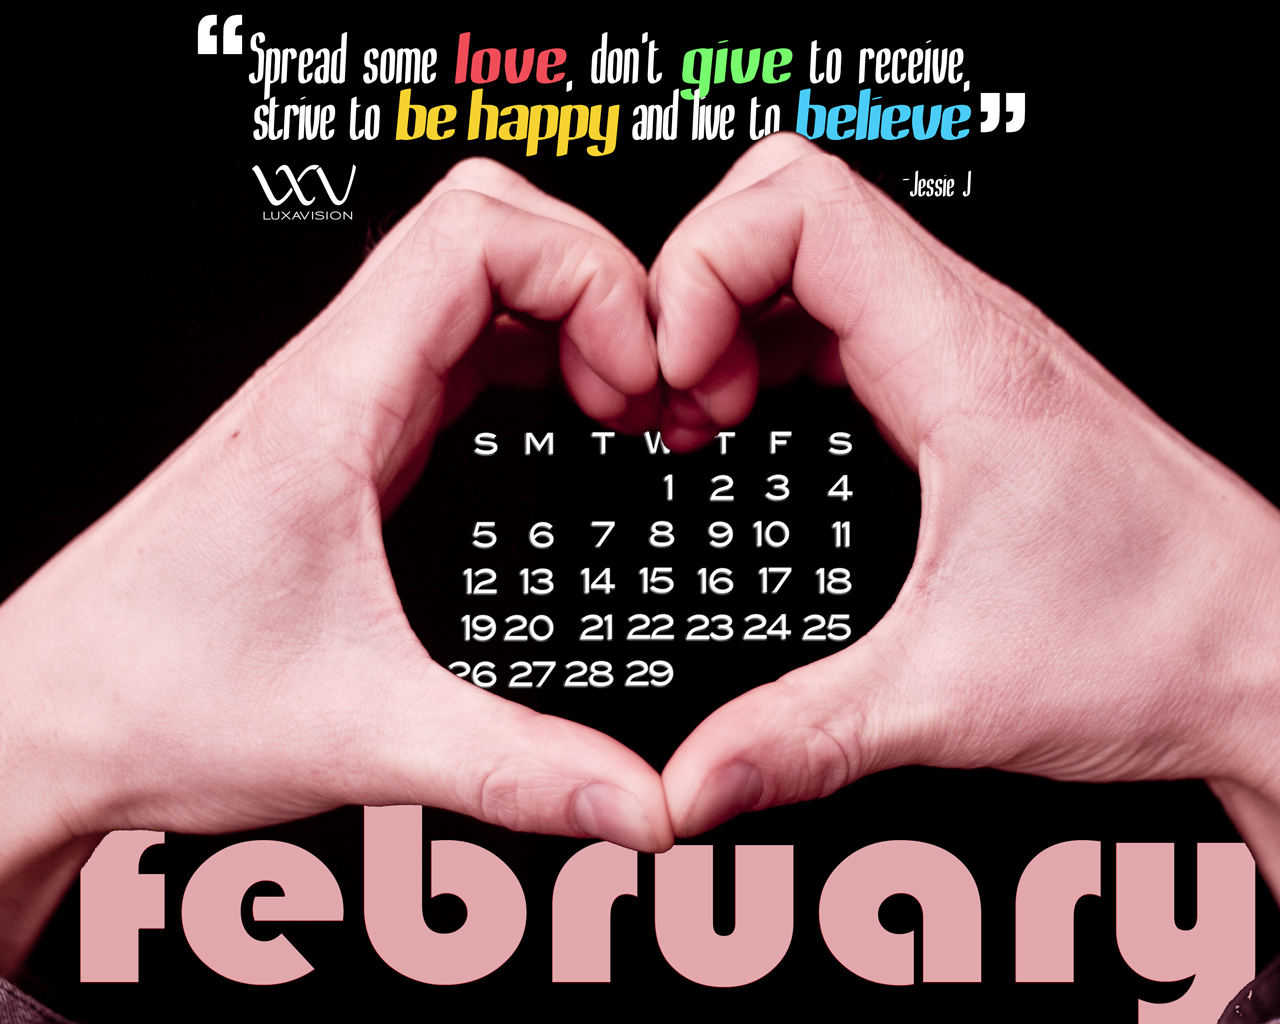 http://3.bp.blogspot.com/-QAlOj2Co63E/TyqGNr3qFaI/AAAAAAAAFB8/MEWVSwDPa9s/s1600/Desktop-Calendar-for-February-2012-Hands-Make-Heart-Shape-1280x1024.jpg